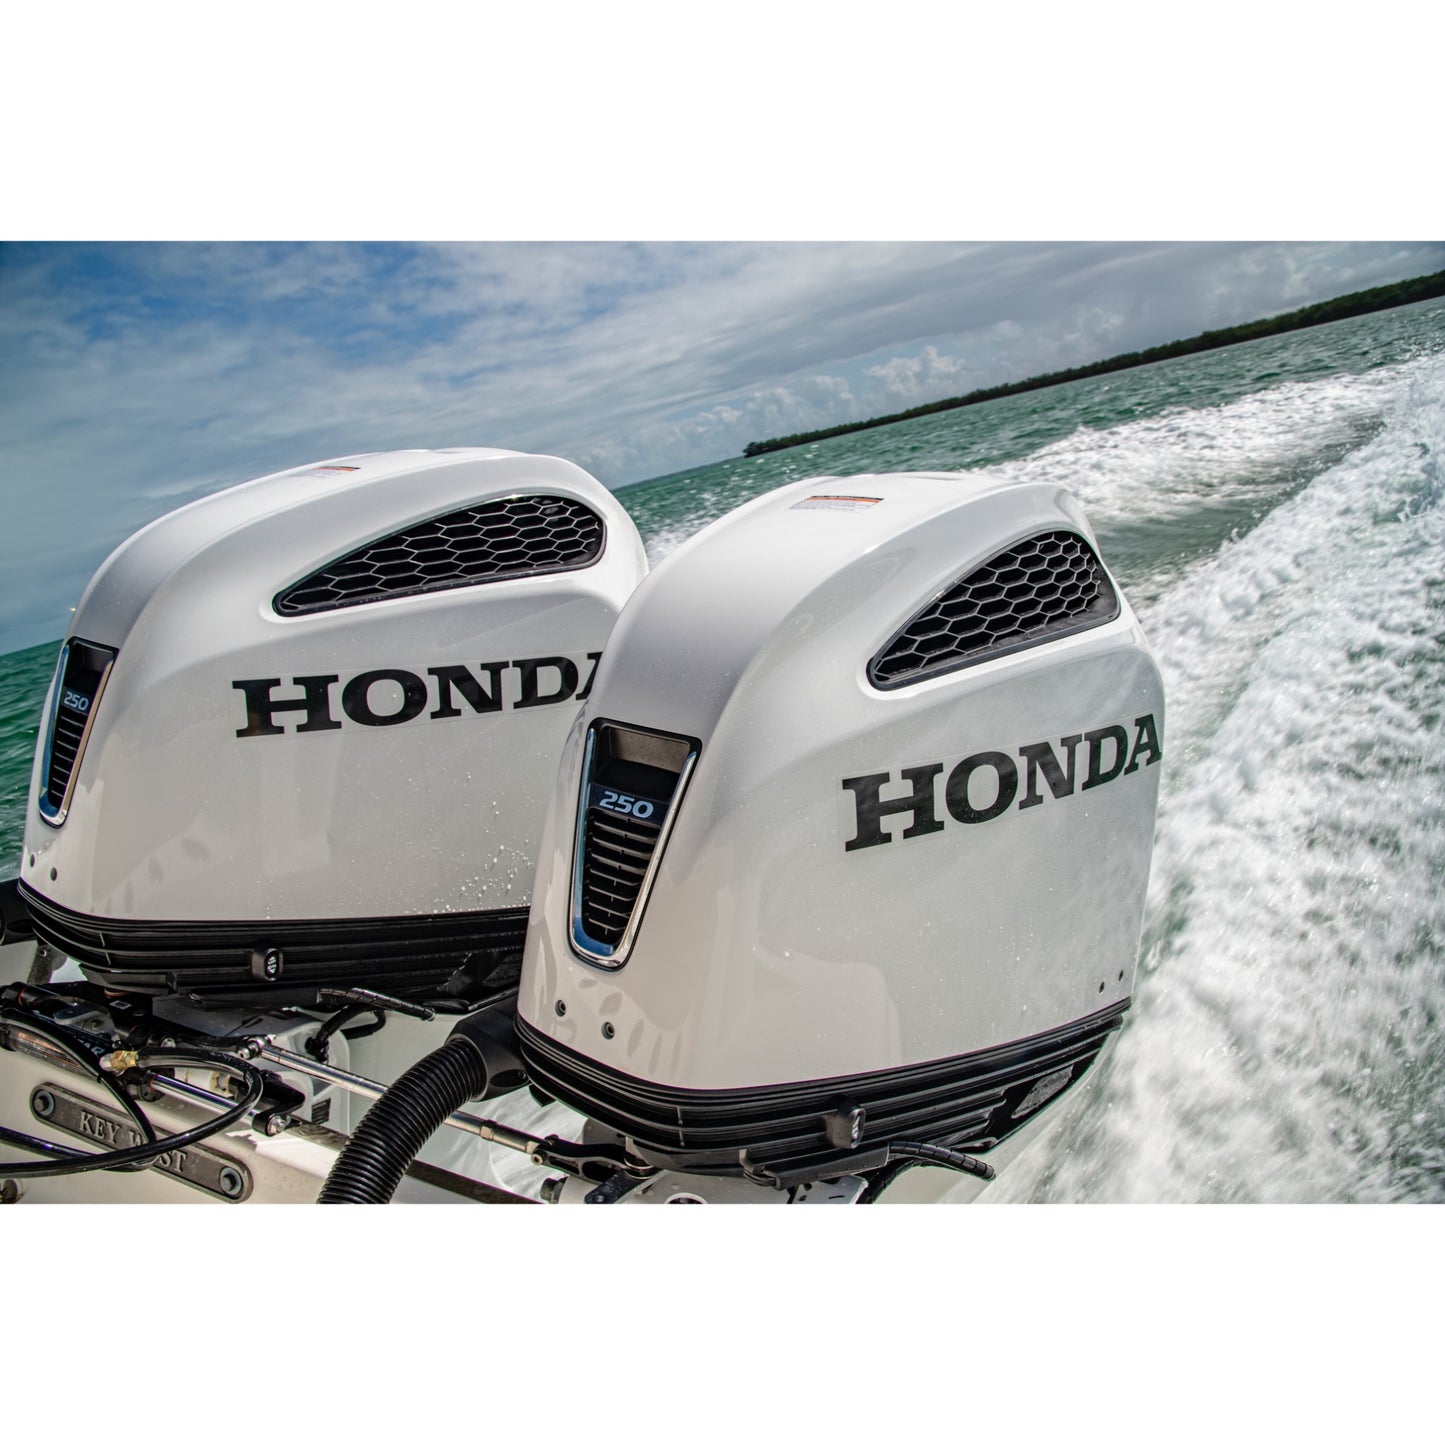 Honda Marine Outboard | BF200 | Large-Size | 4-stroke